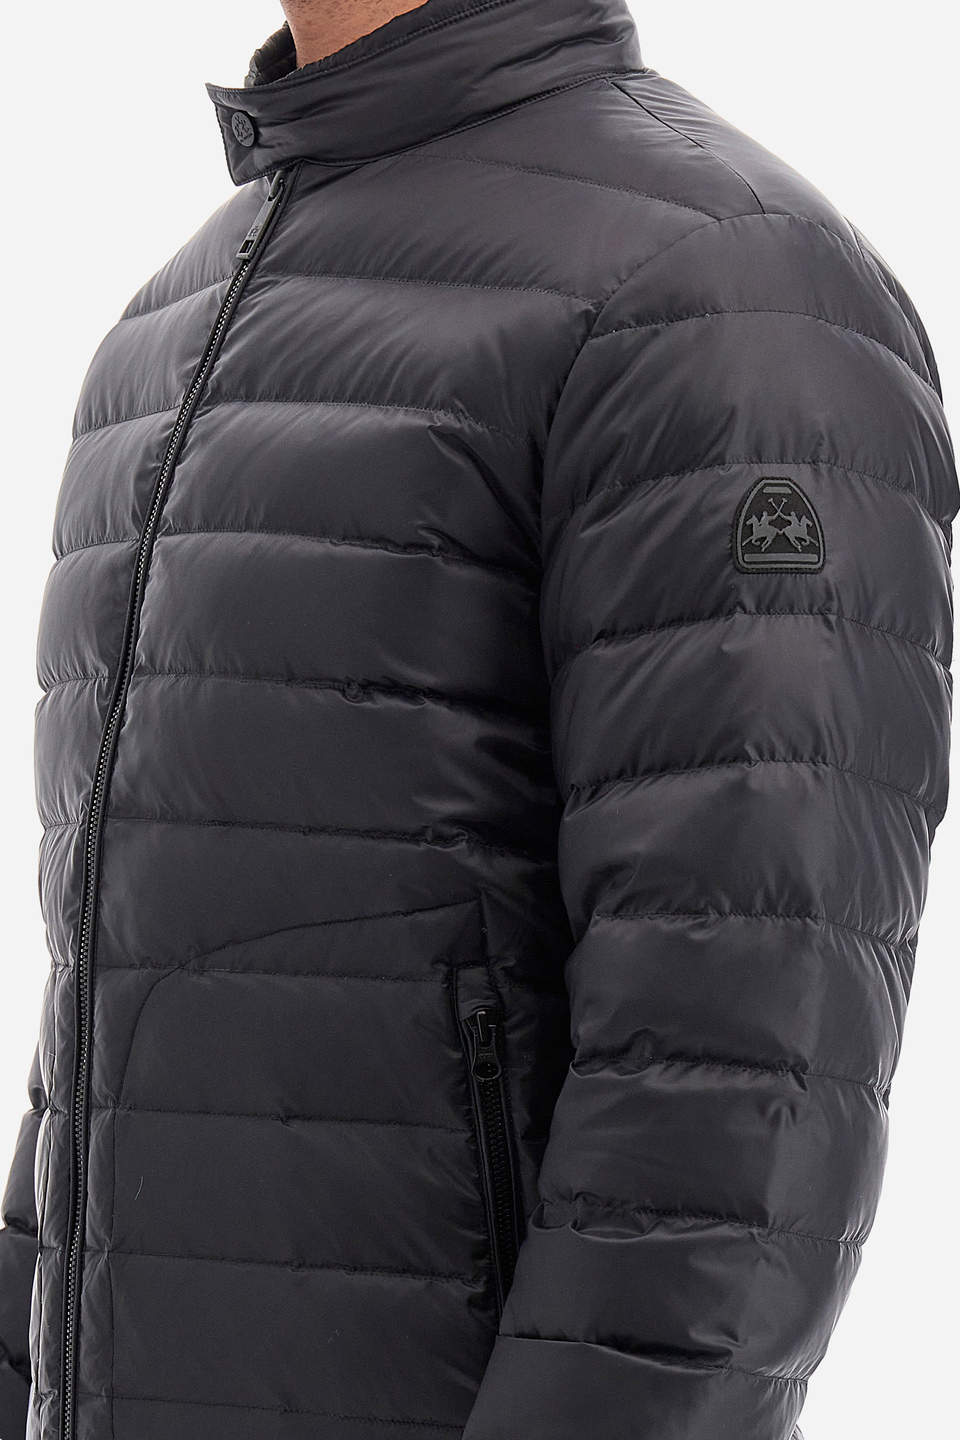 Man jacket in regular fit - Way | La Martina - Official Online Shop